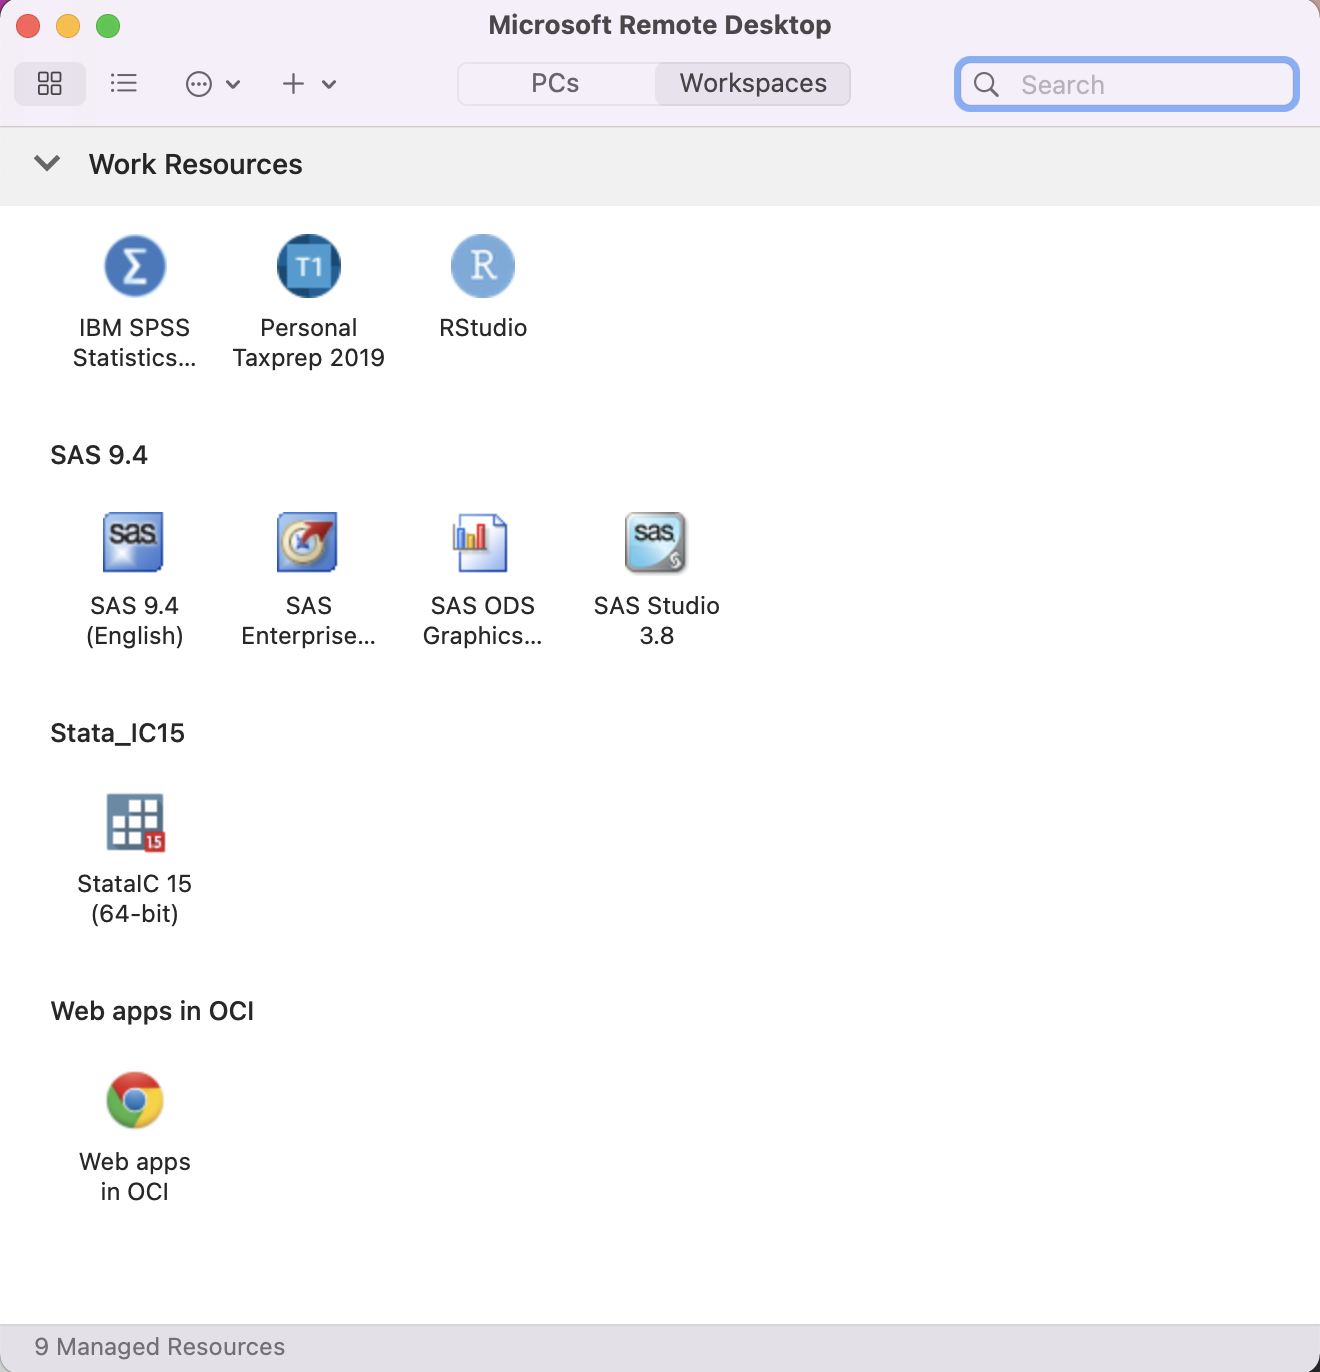 Microsoft remote desktop, work resources applications